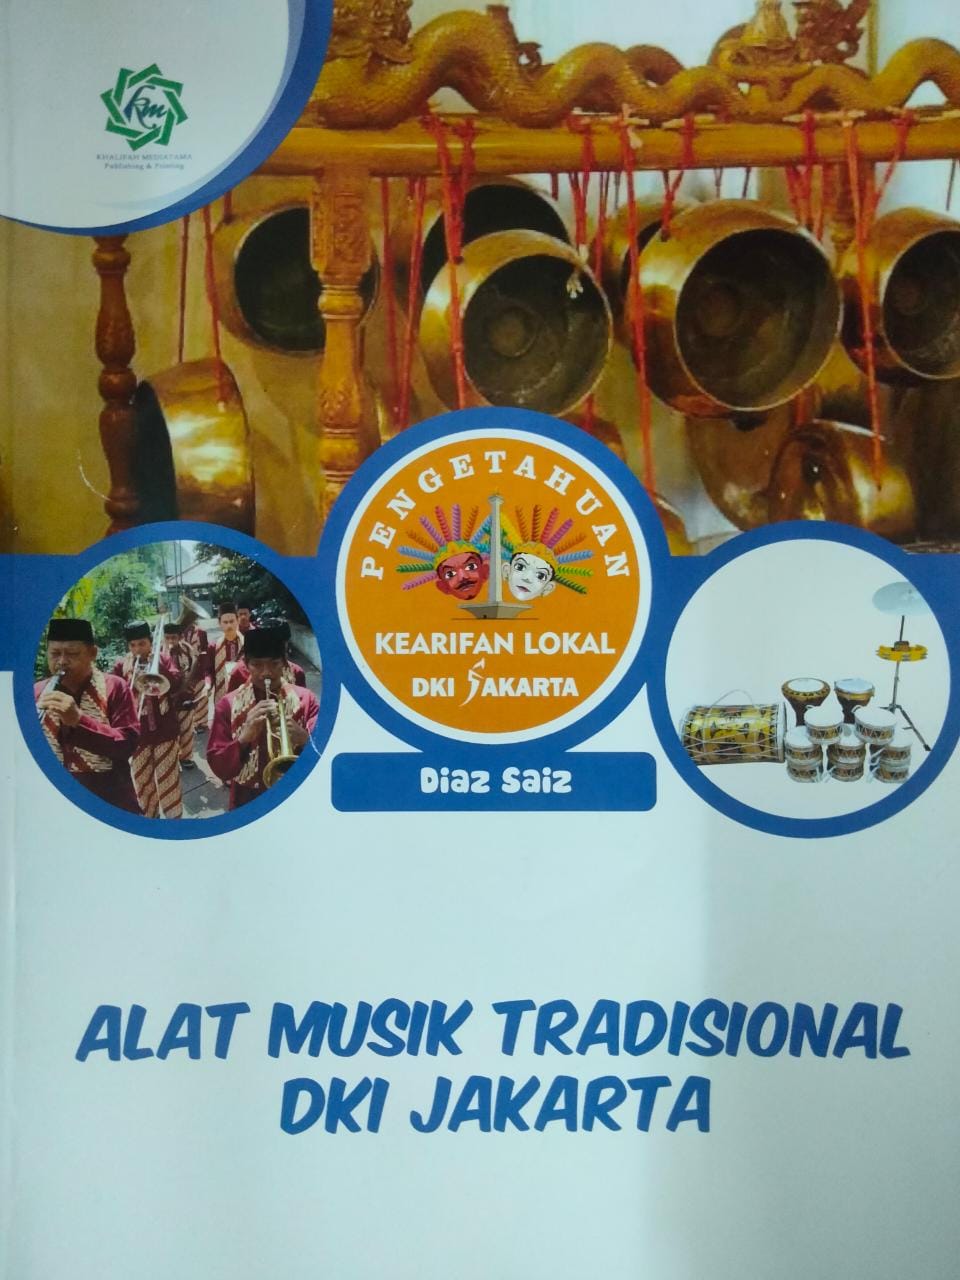 Alat musik tradisonal DKI Jakarta